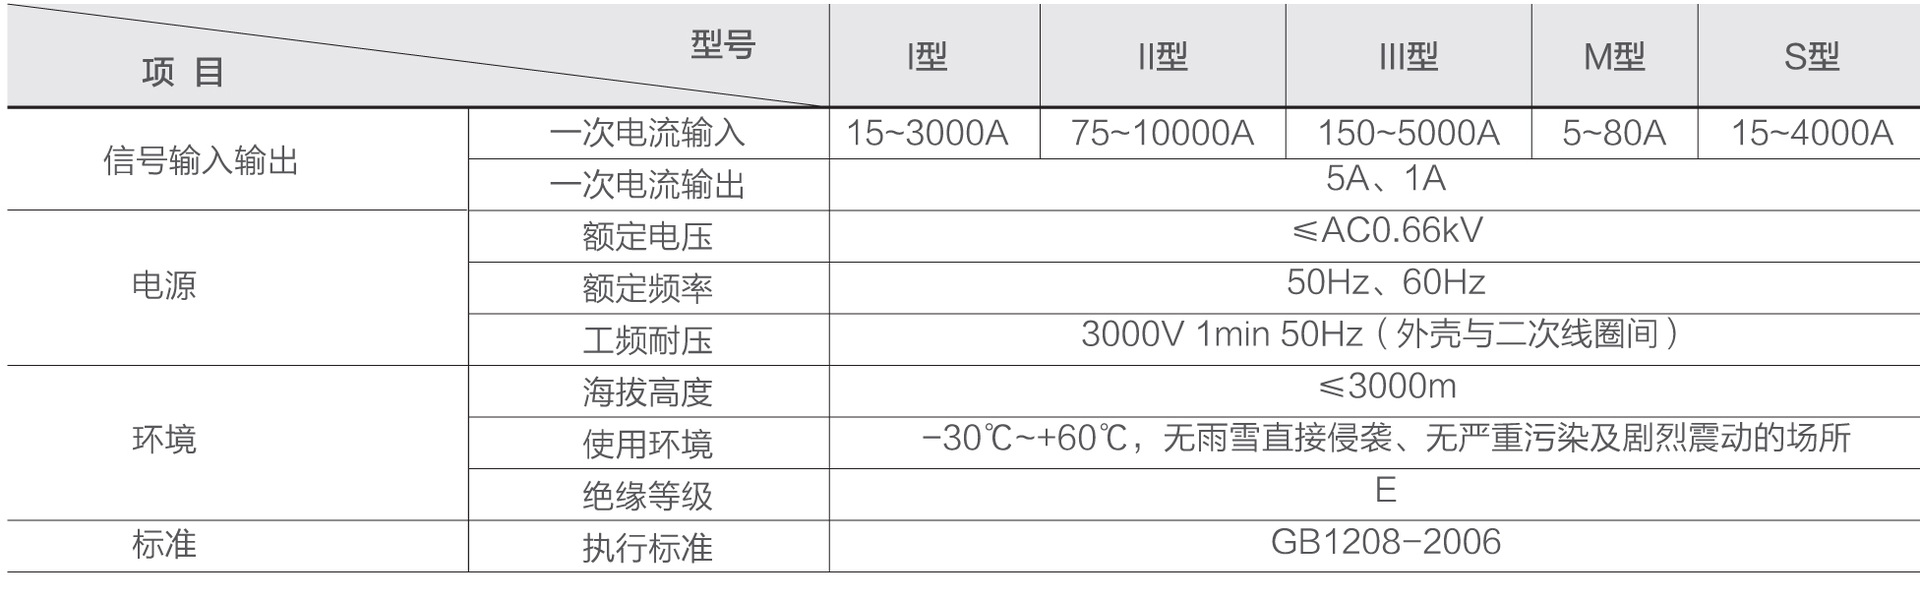 SHI-066-80I精度等级02级电流互感器江苏斯菲尔厂家直销 电流互感器,江苏斯菲尔厂家直销,SHI-066